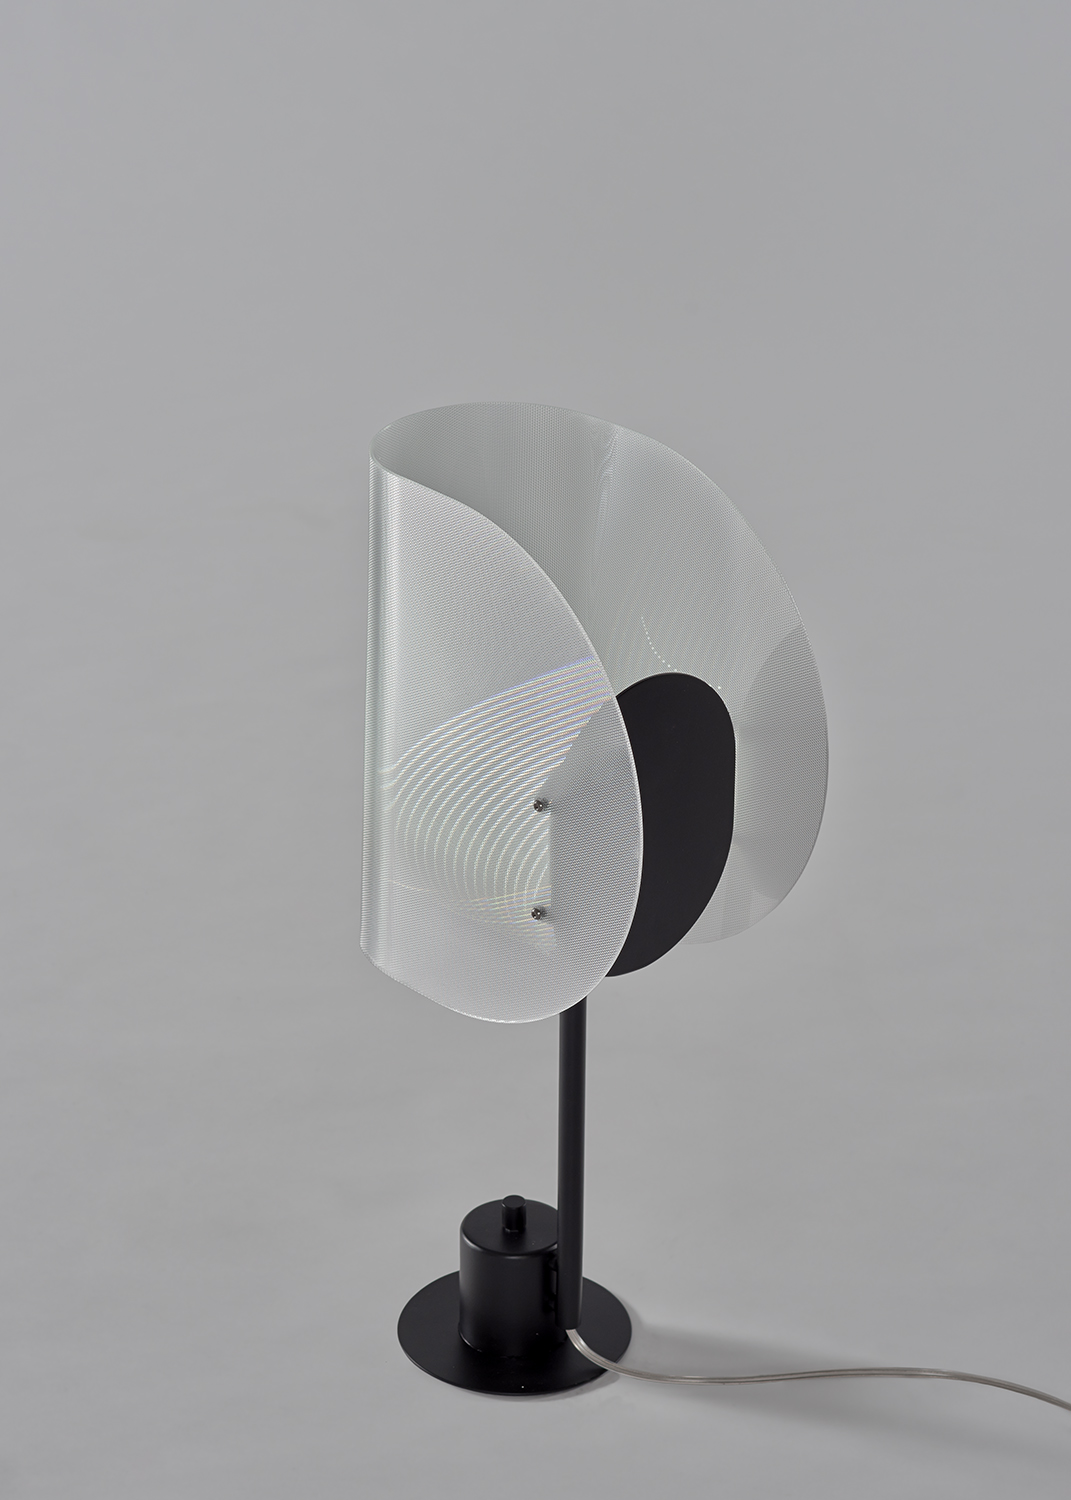 Every Cone Light 3 - Arnout Meijer Studio